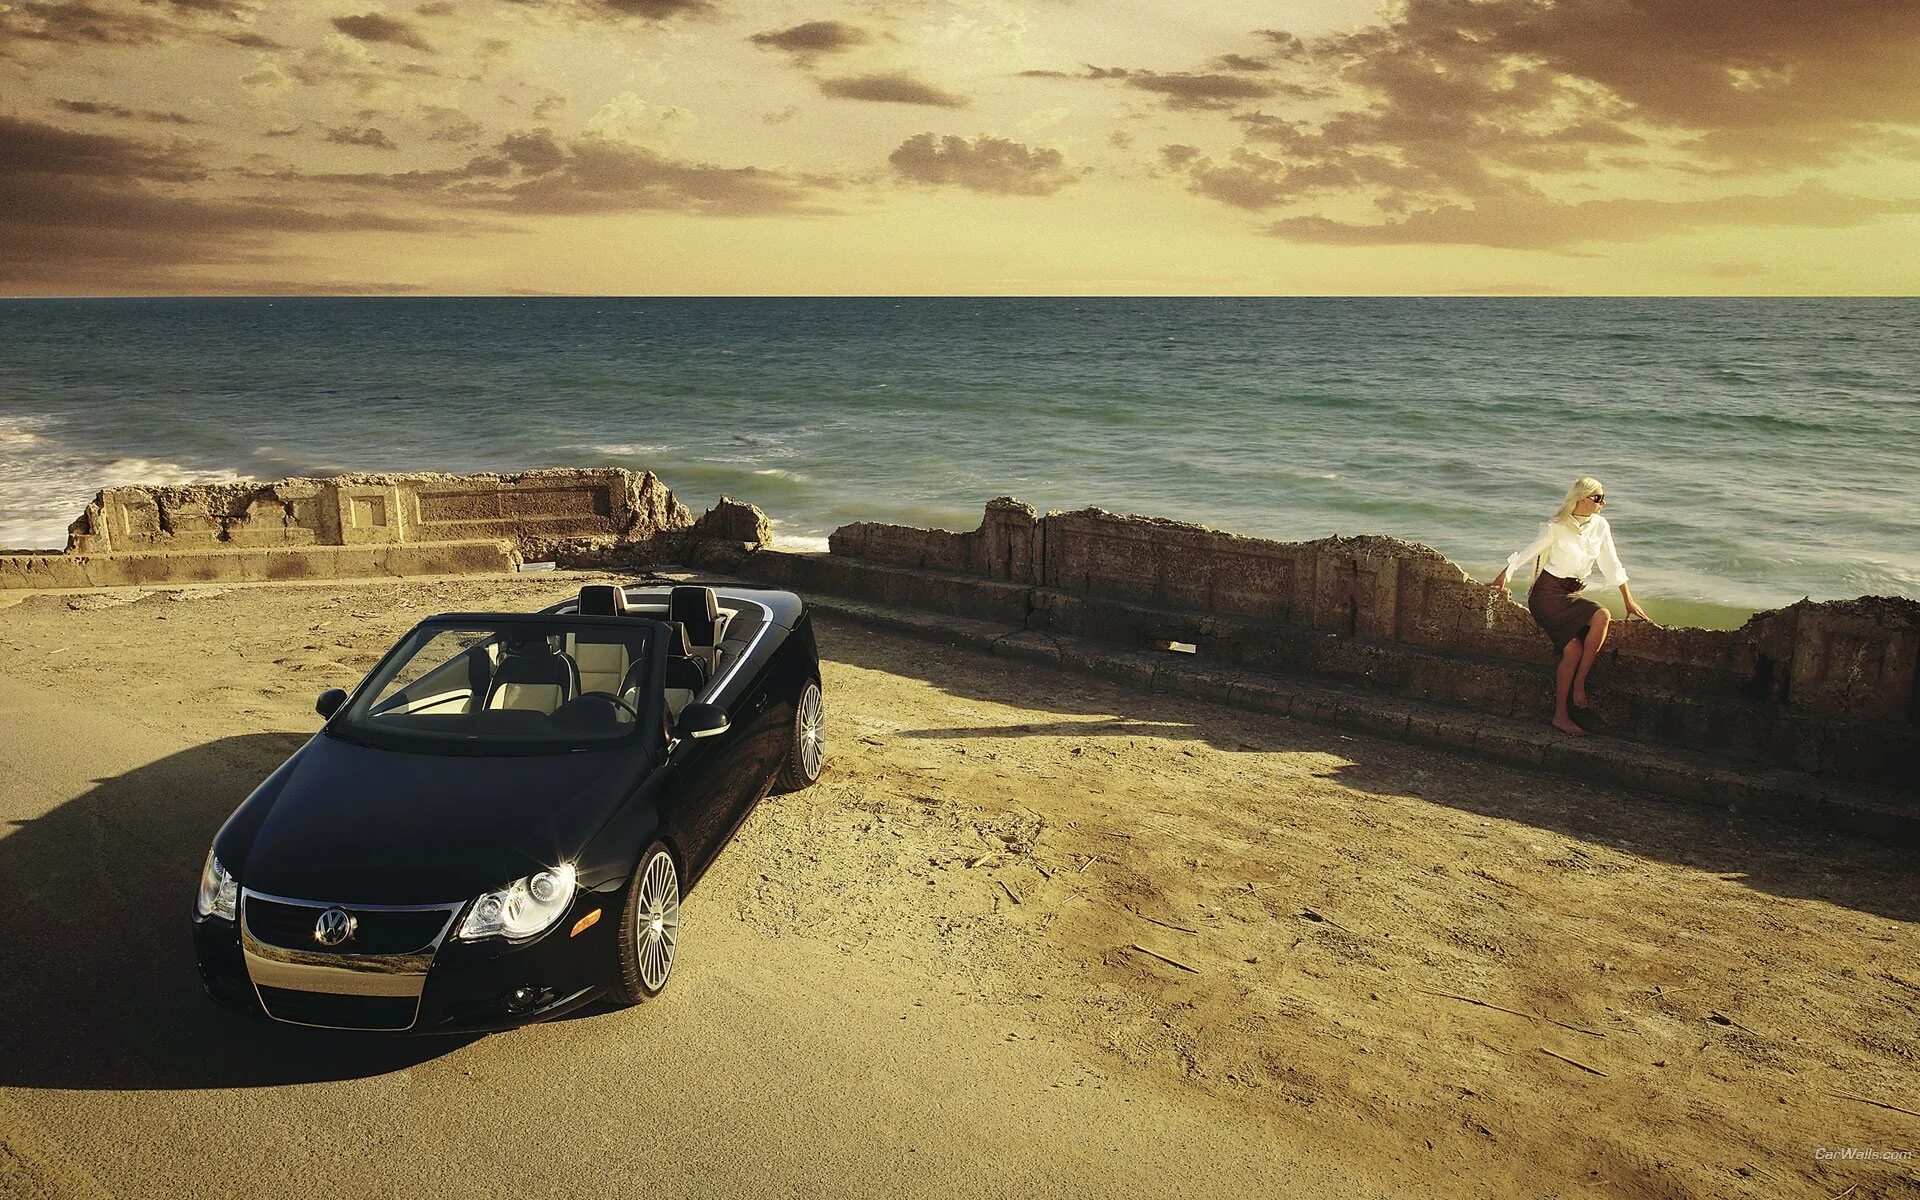 Фото на фоне машины. На море на машине. Машина на берегу моря. Машина на фоне моря. Машина возле моря.